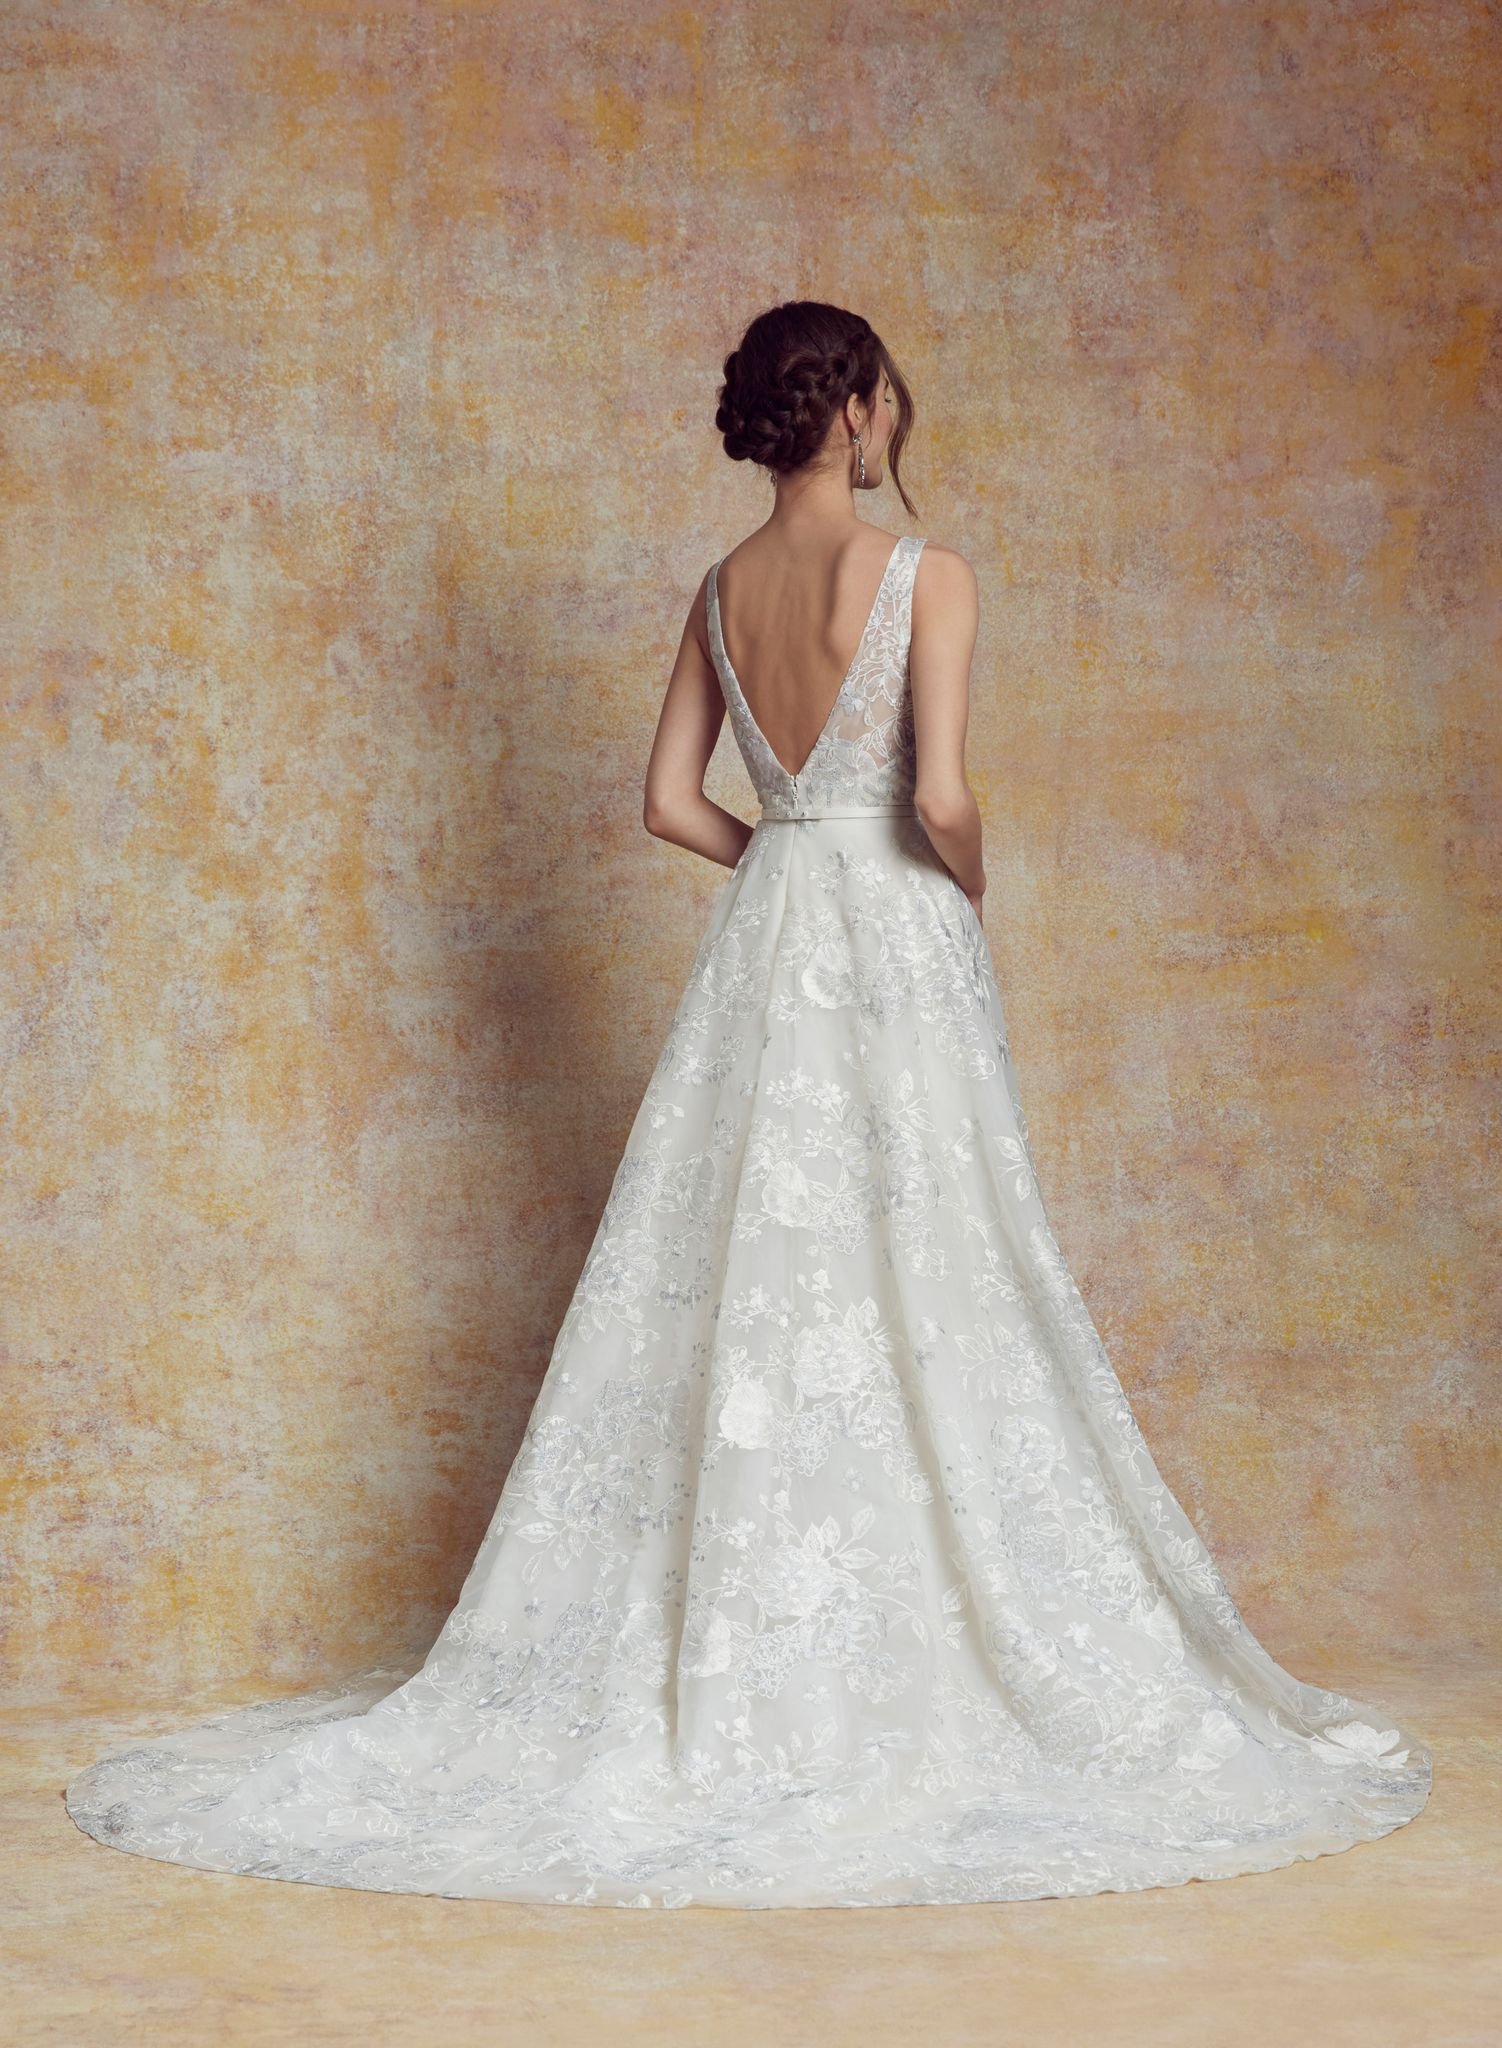 blanc-de-blanc-bridal-boutique-cleveland-dress-wedding-gown-Lana..jpeg